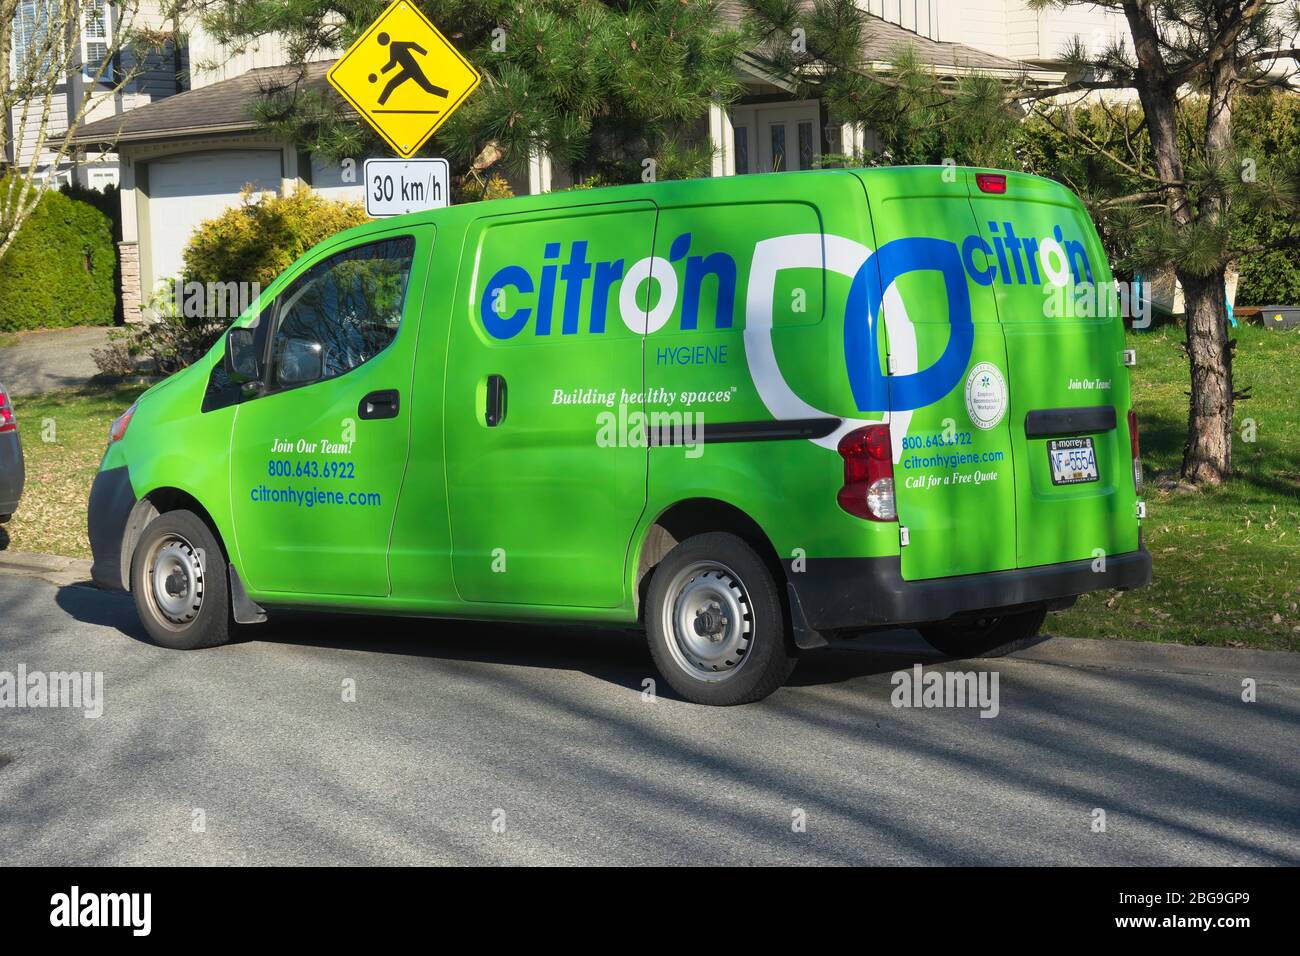 Citron Hygiene Van seen on a street in Metro Vancouver, B. C., Canada Stock Photo